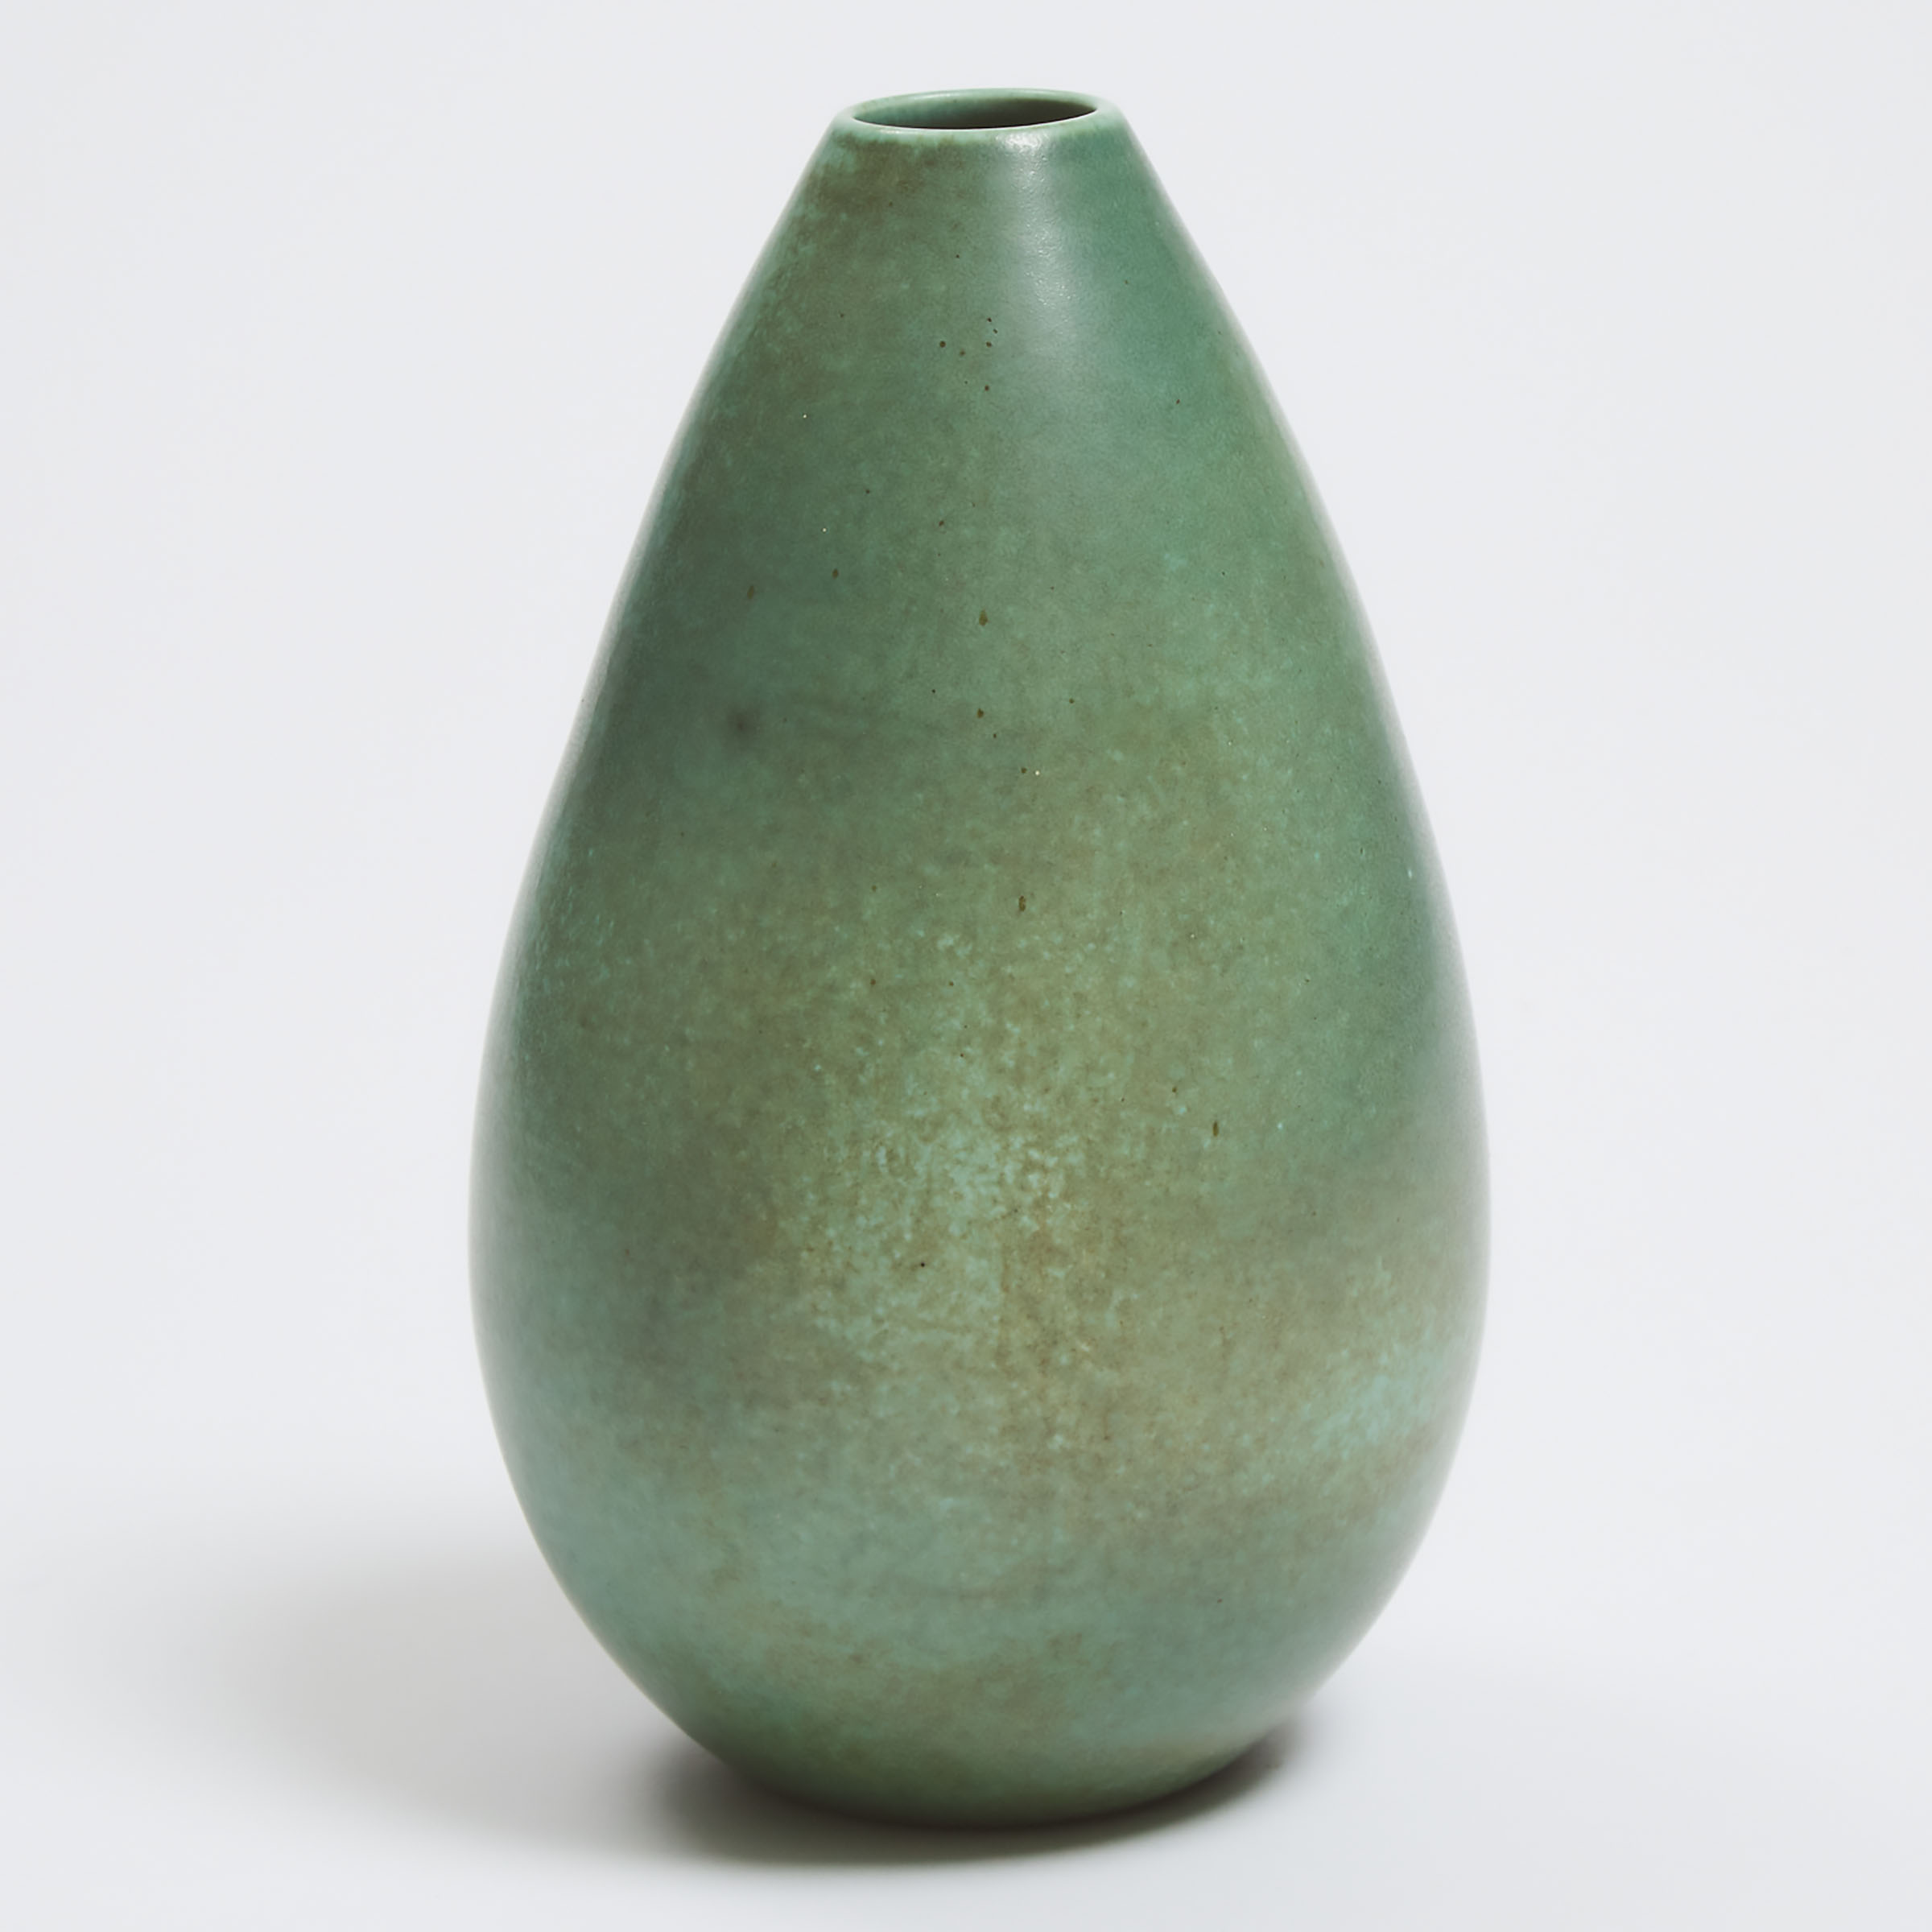 Deichmann Mottled Green Glazed Vase, Kjeld & Erica Deichmann, mid-20th century